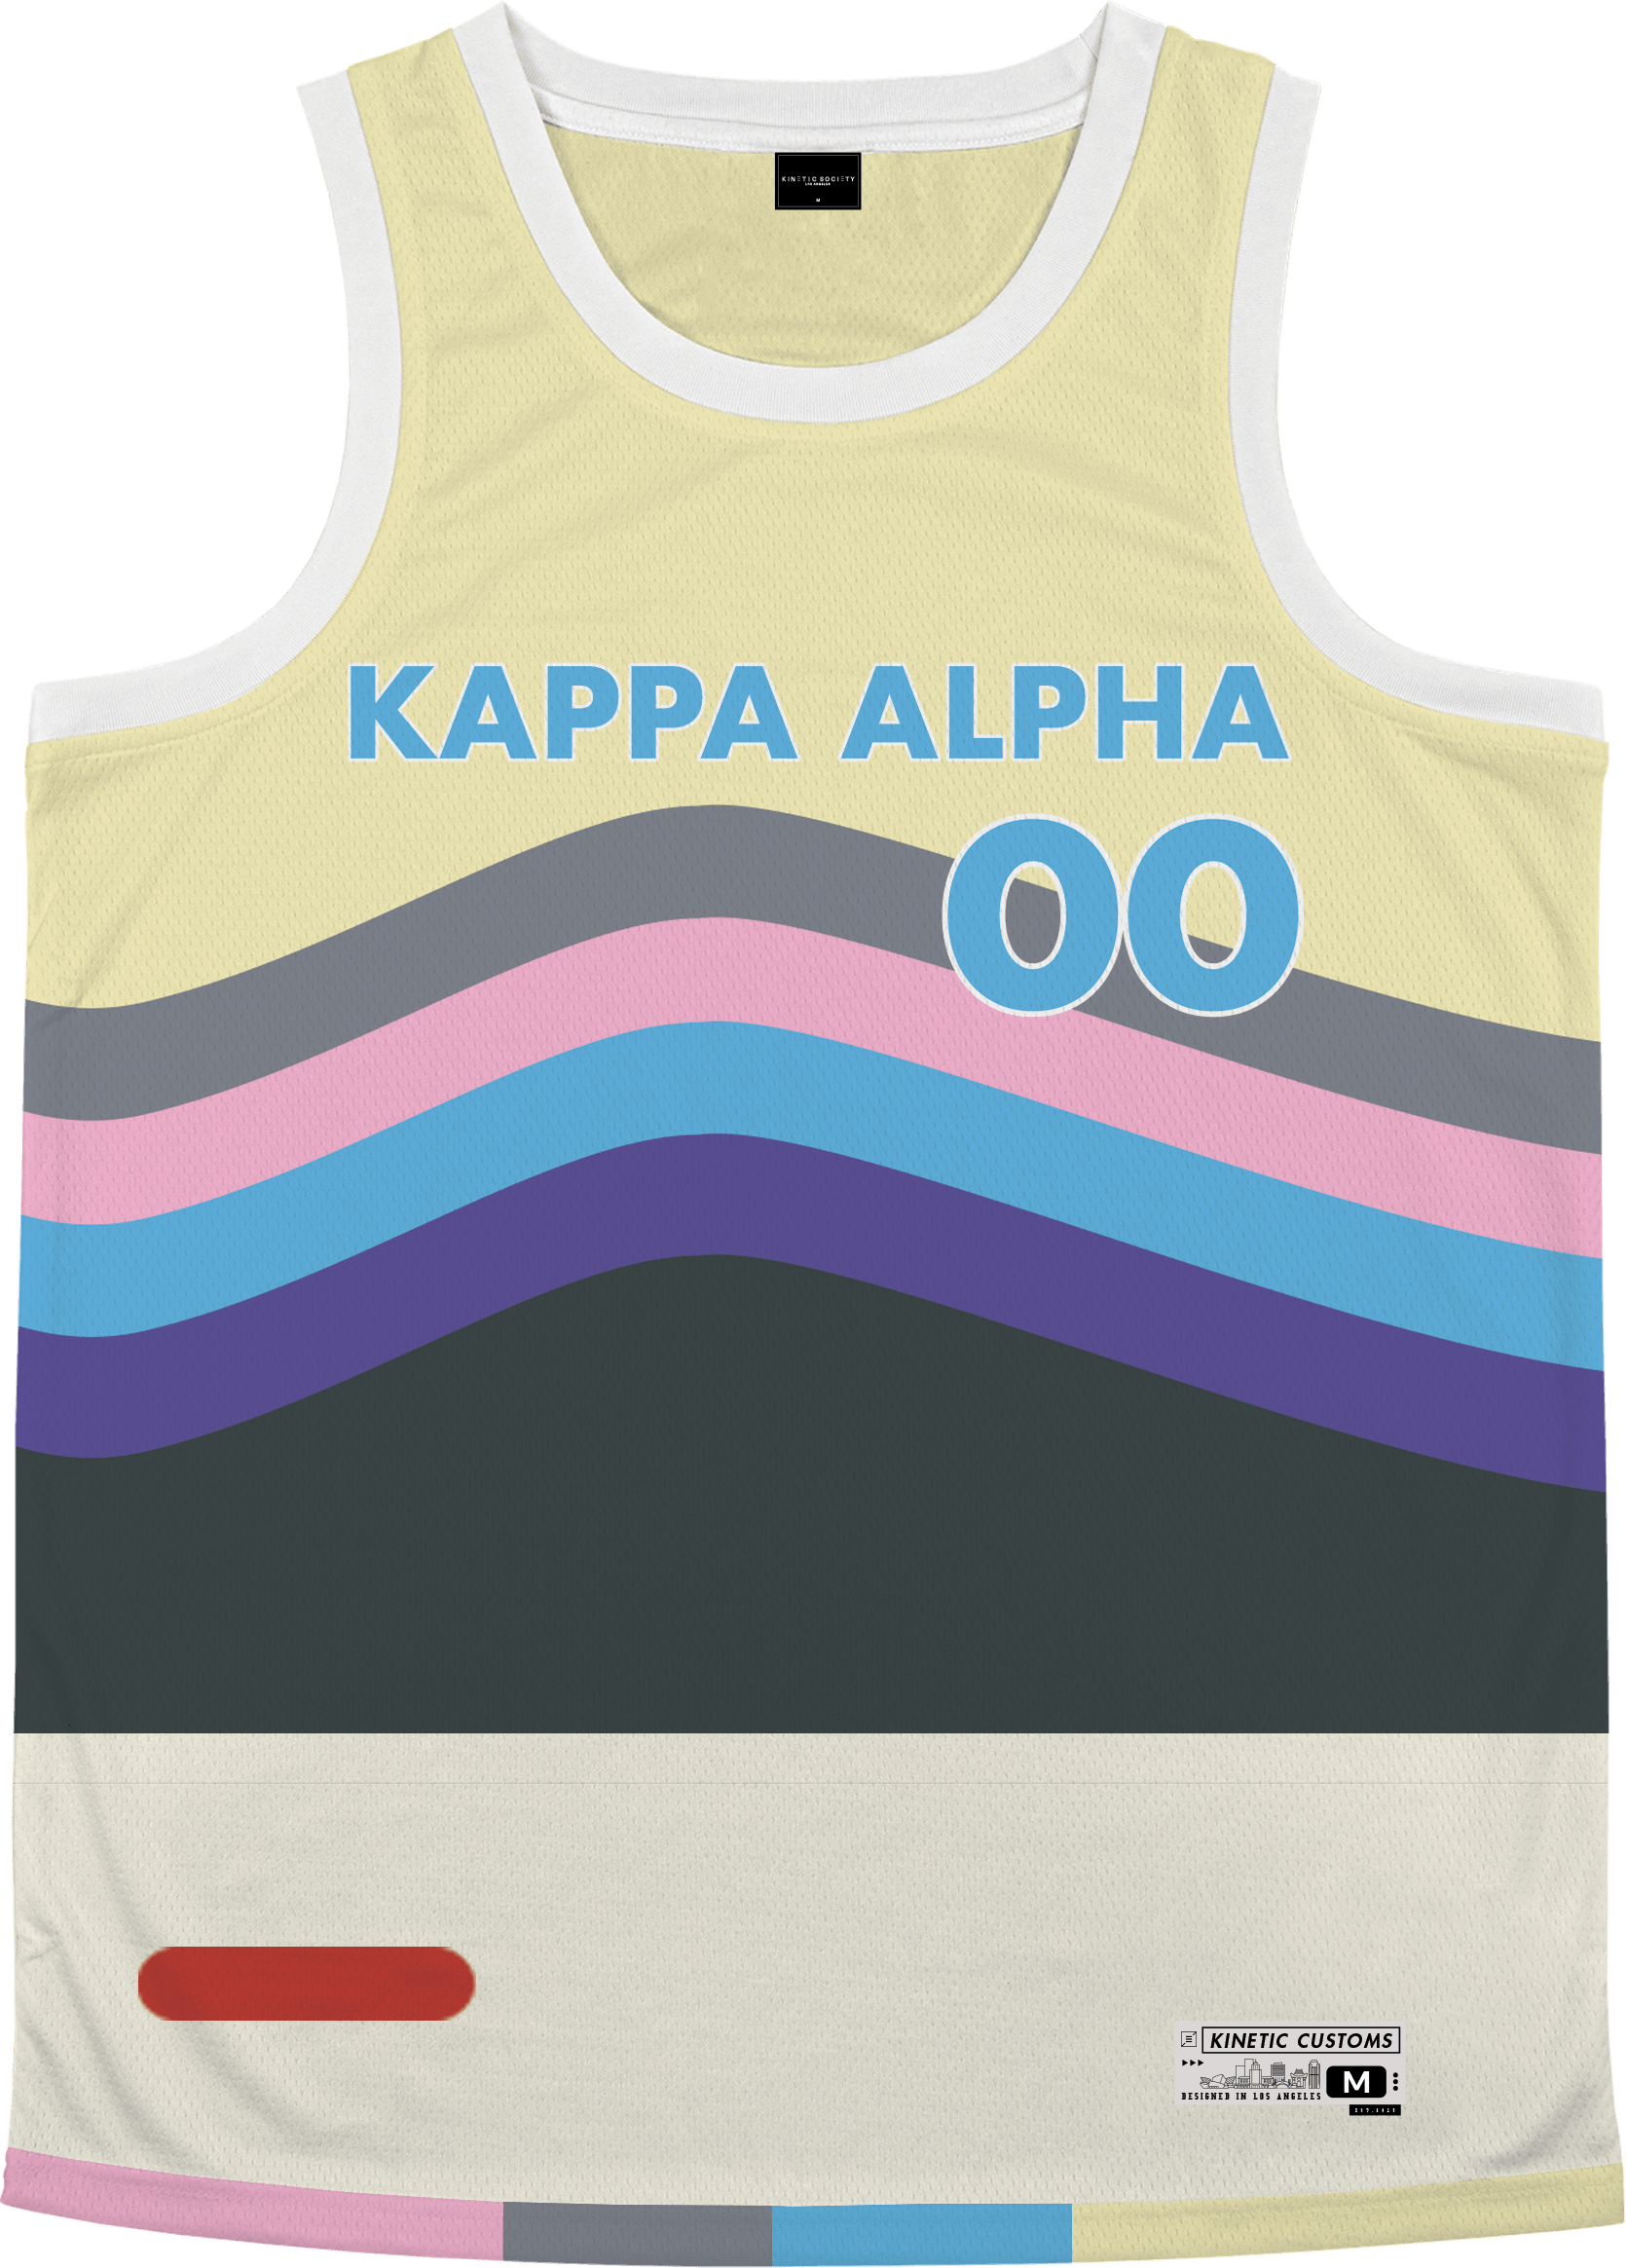 Kappa Alpha Order - Swirl Basketball Jersey - Kinetic Society